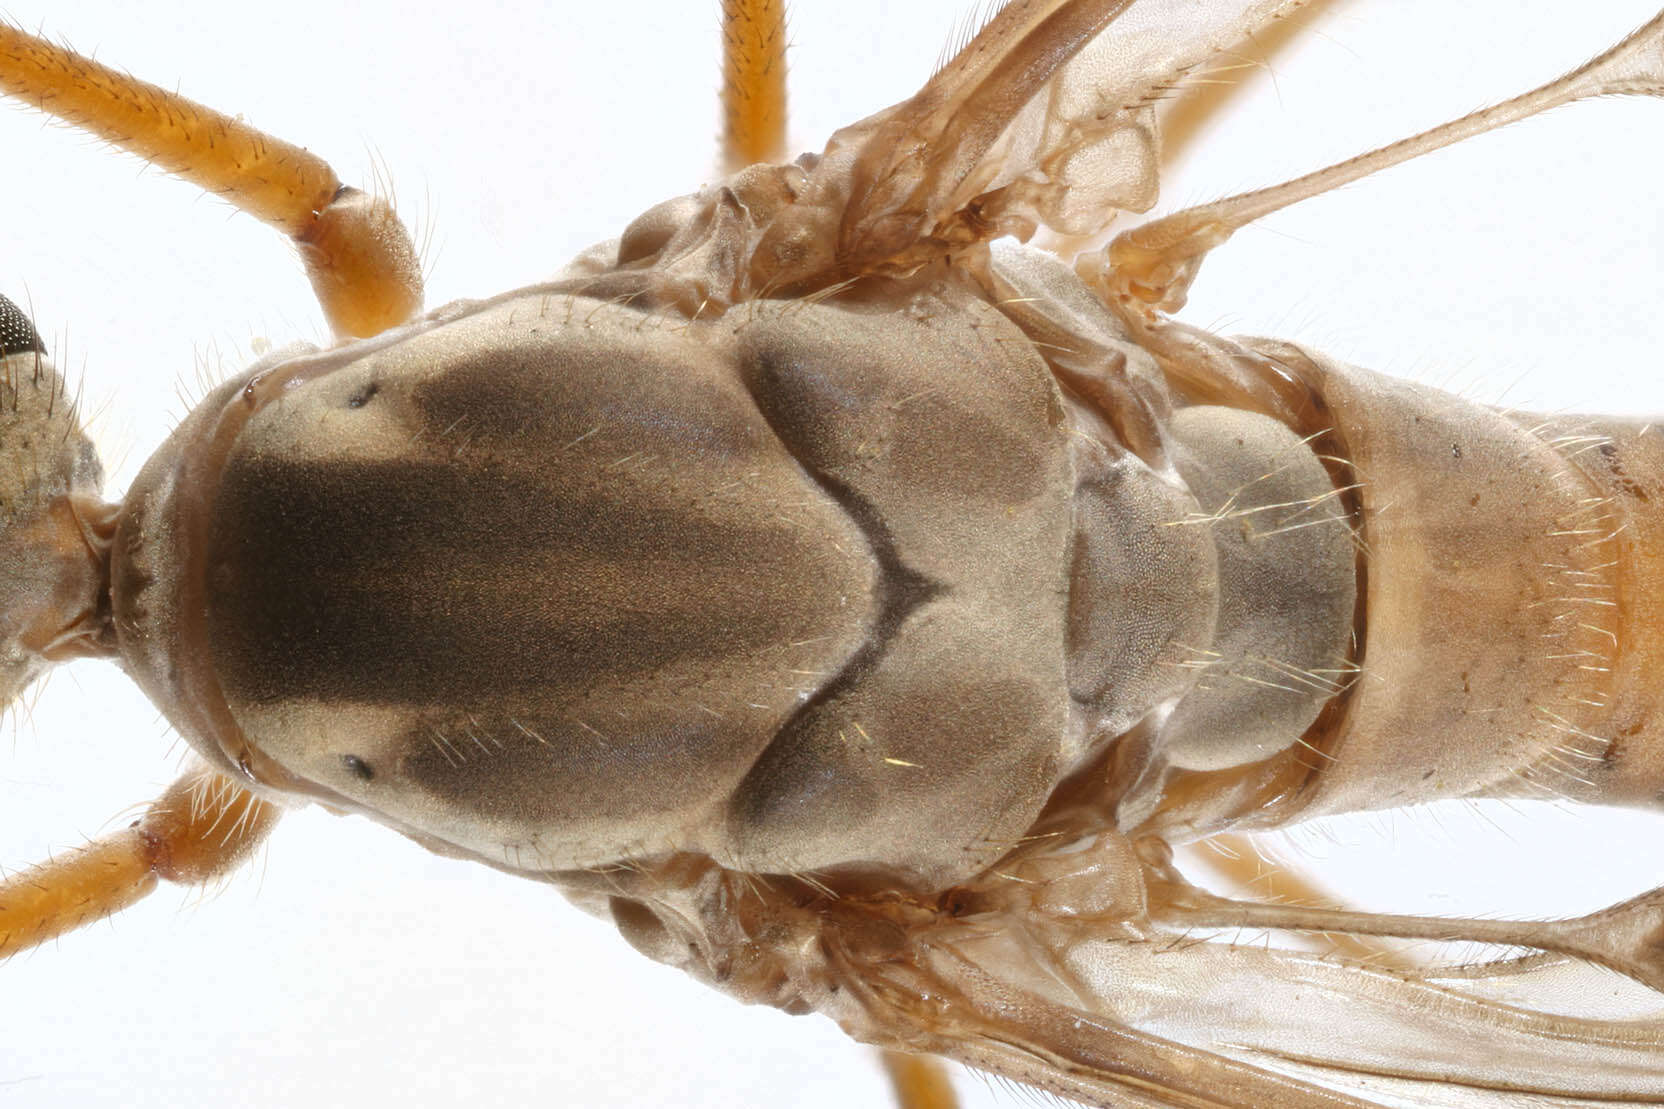 Image of Tipula (Savtshenkia) confusa van der Wulp 1883